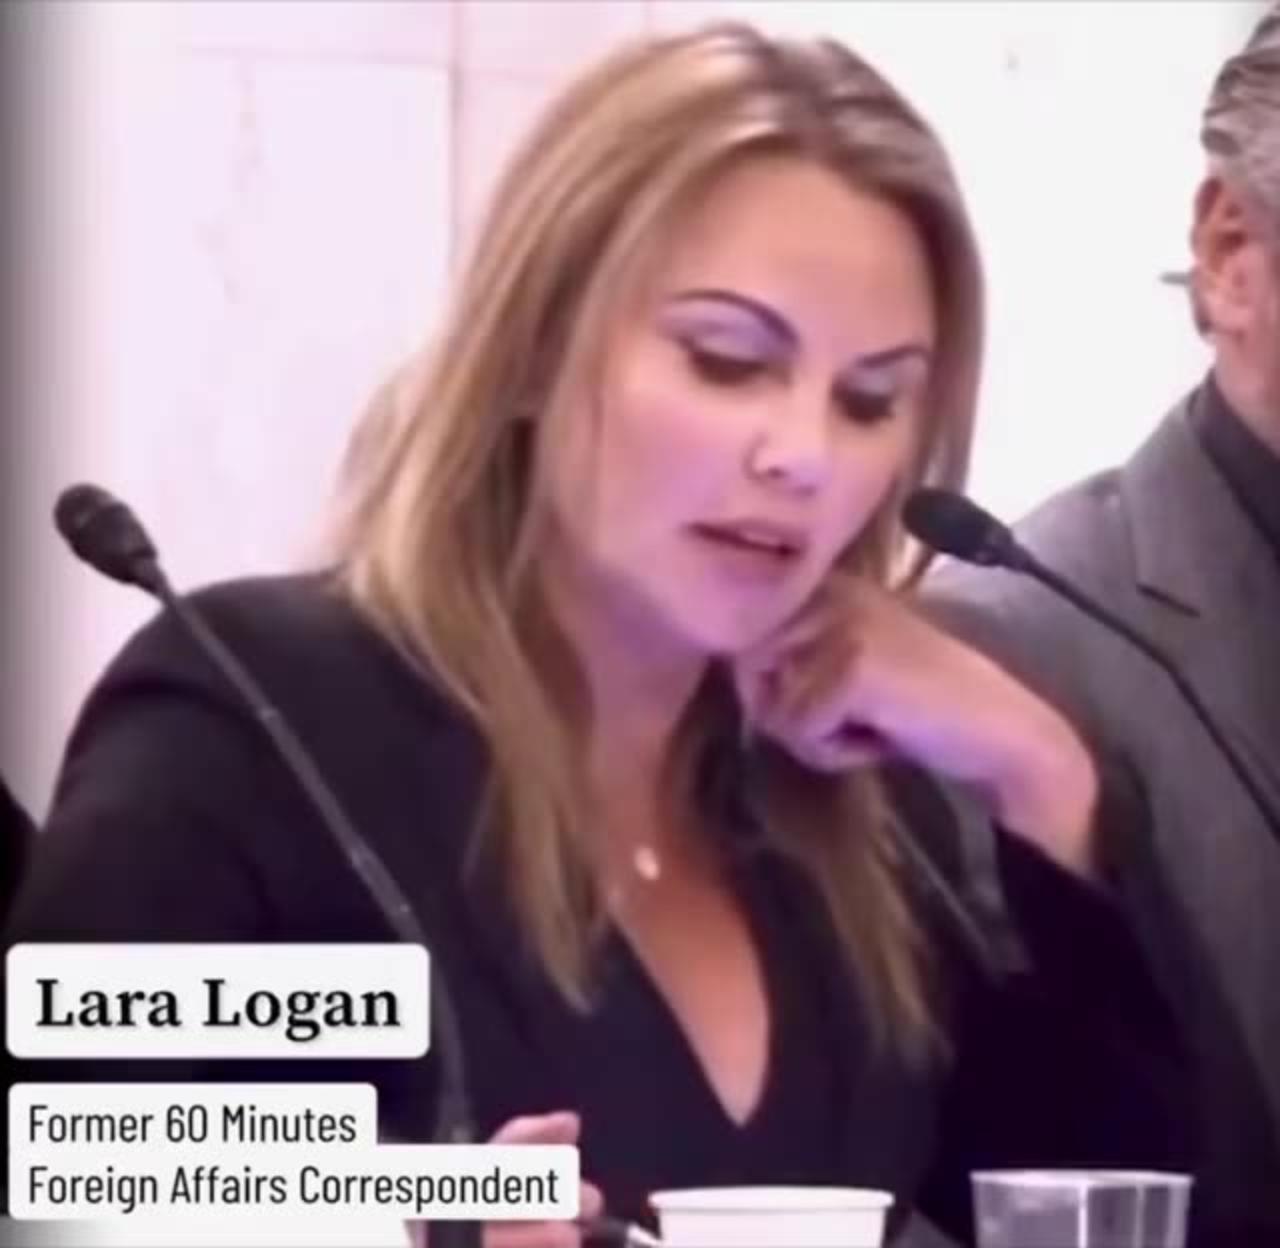 Lara Logan is an accomplished journalist